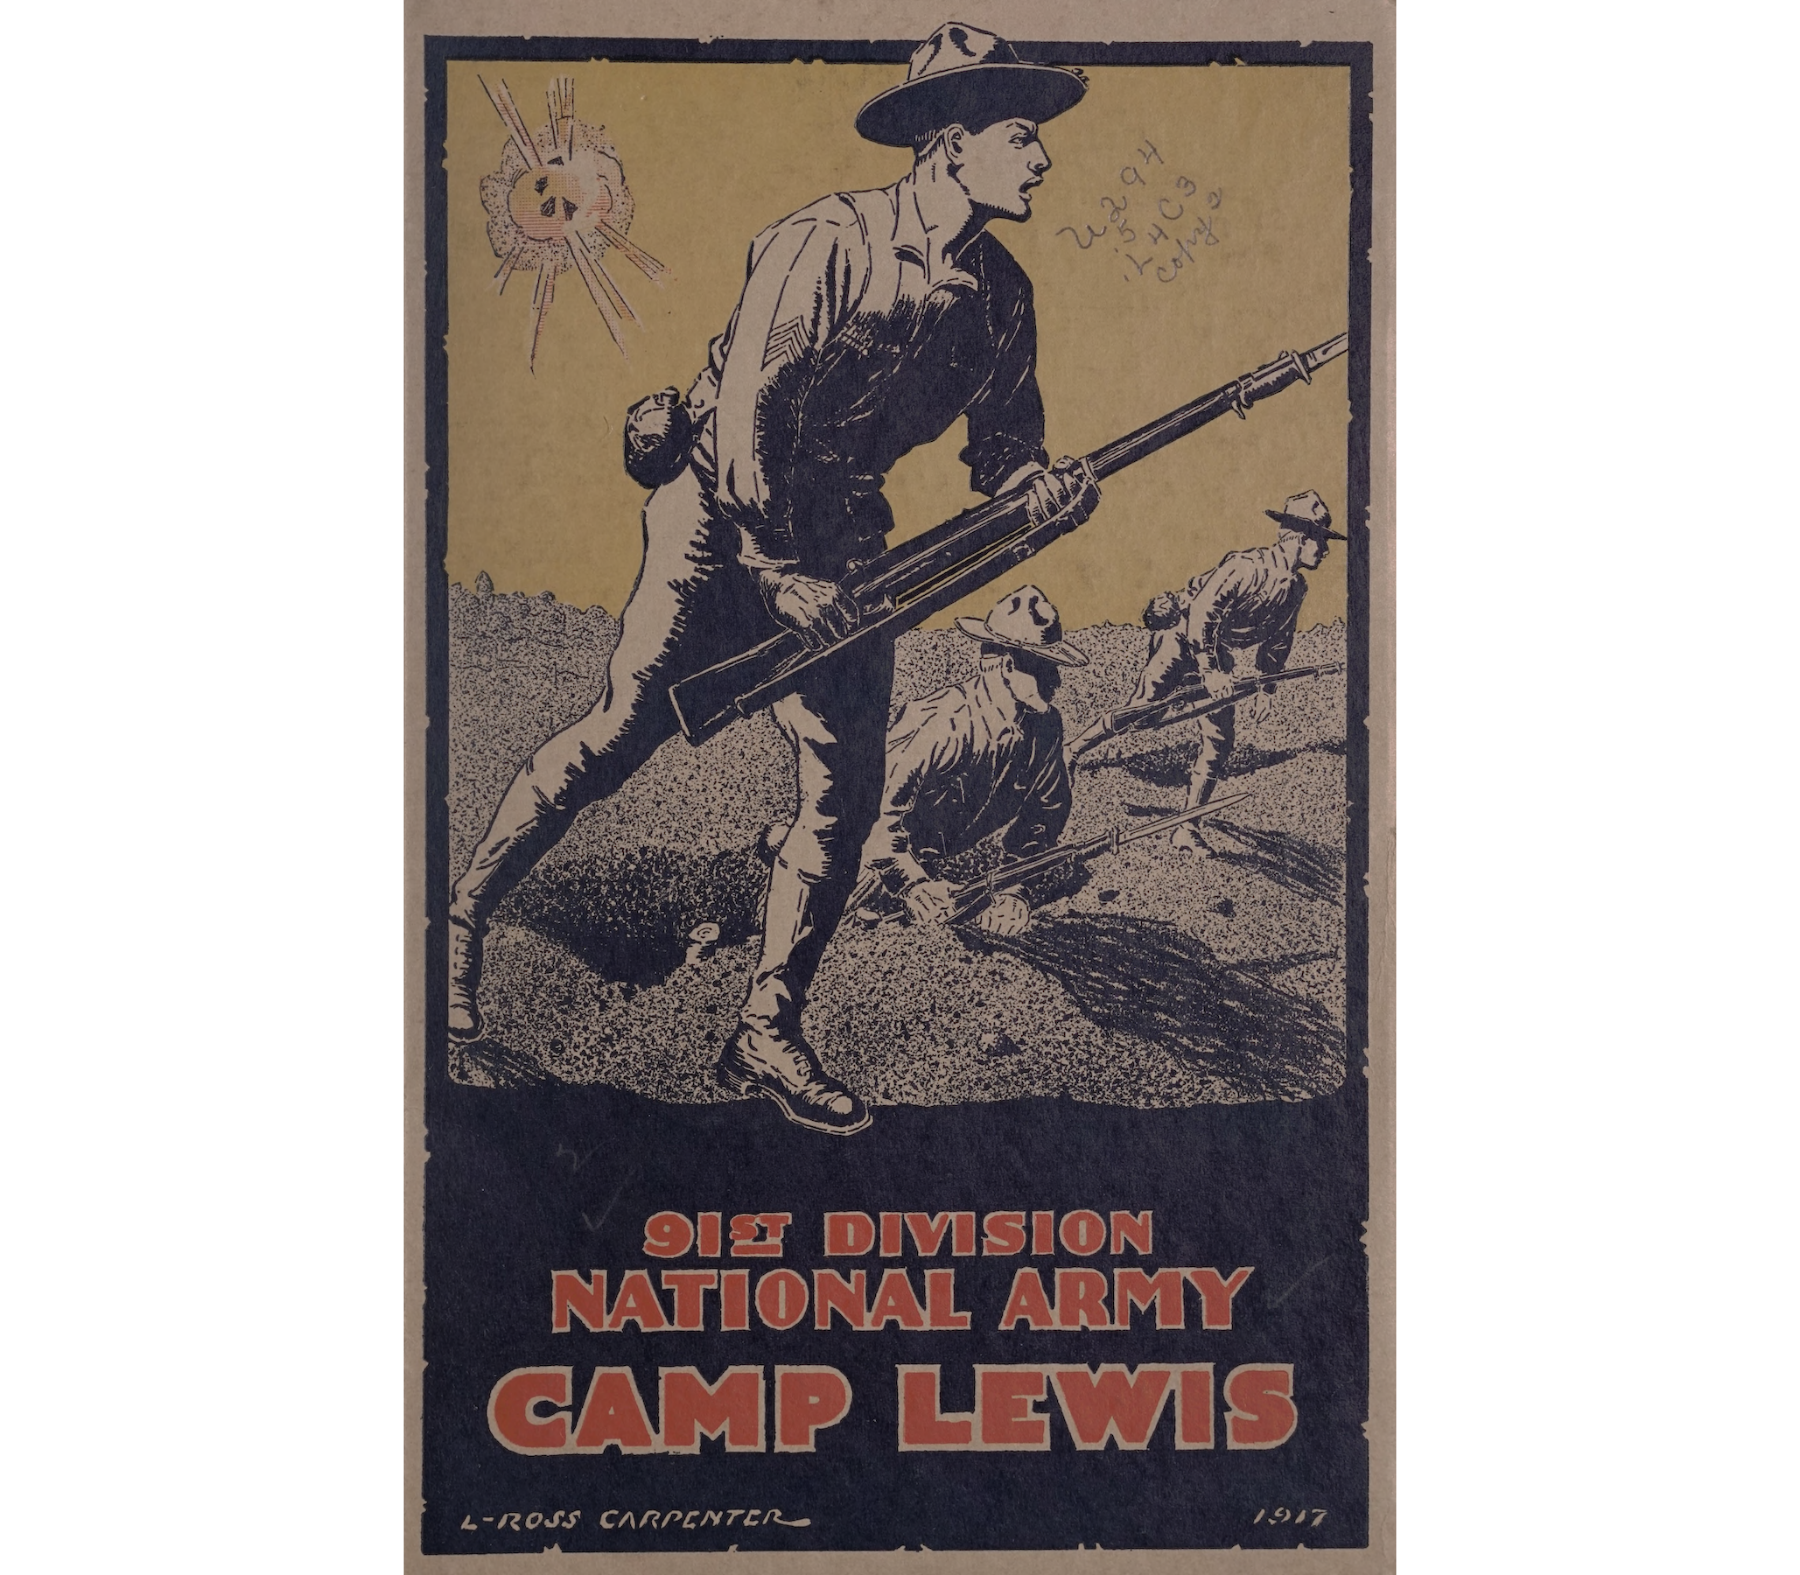 91st Division at Camp Lewis